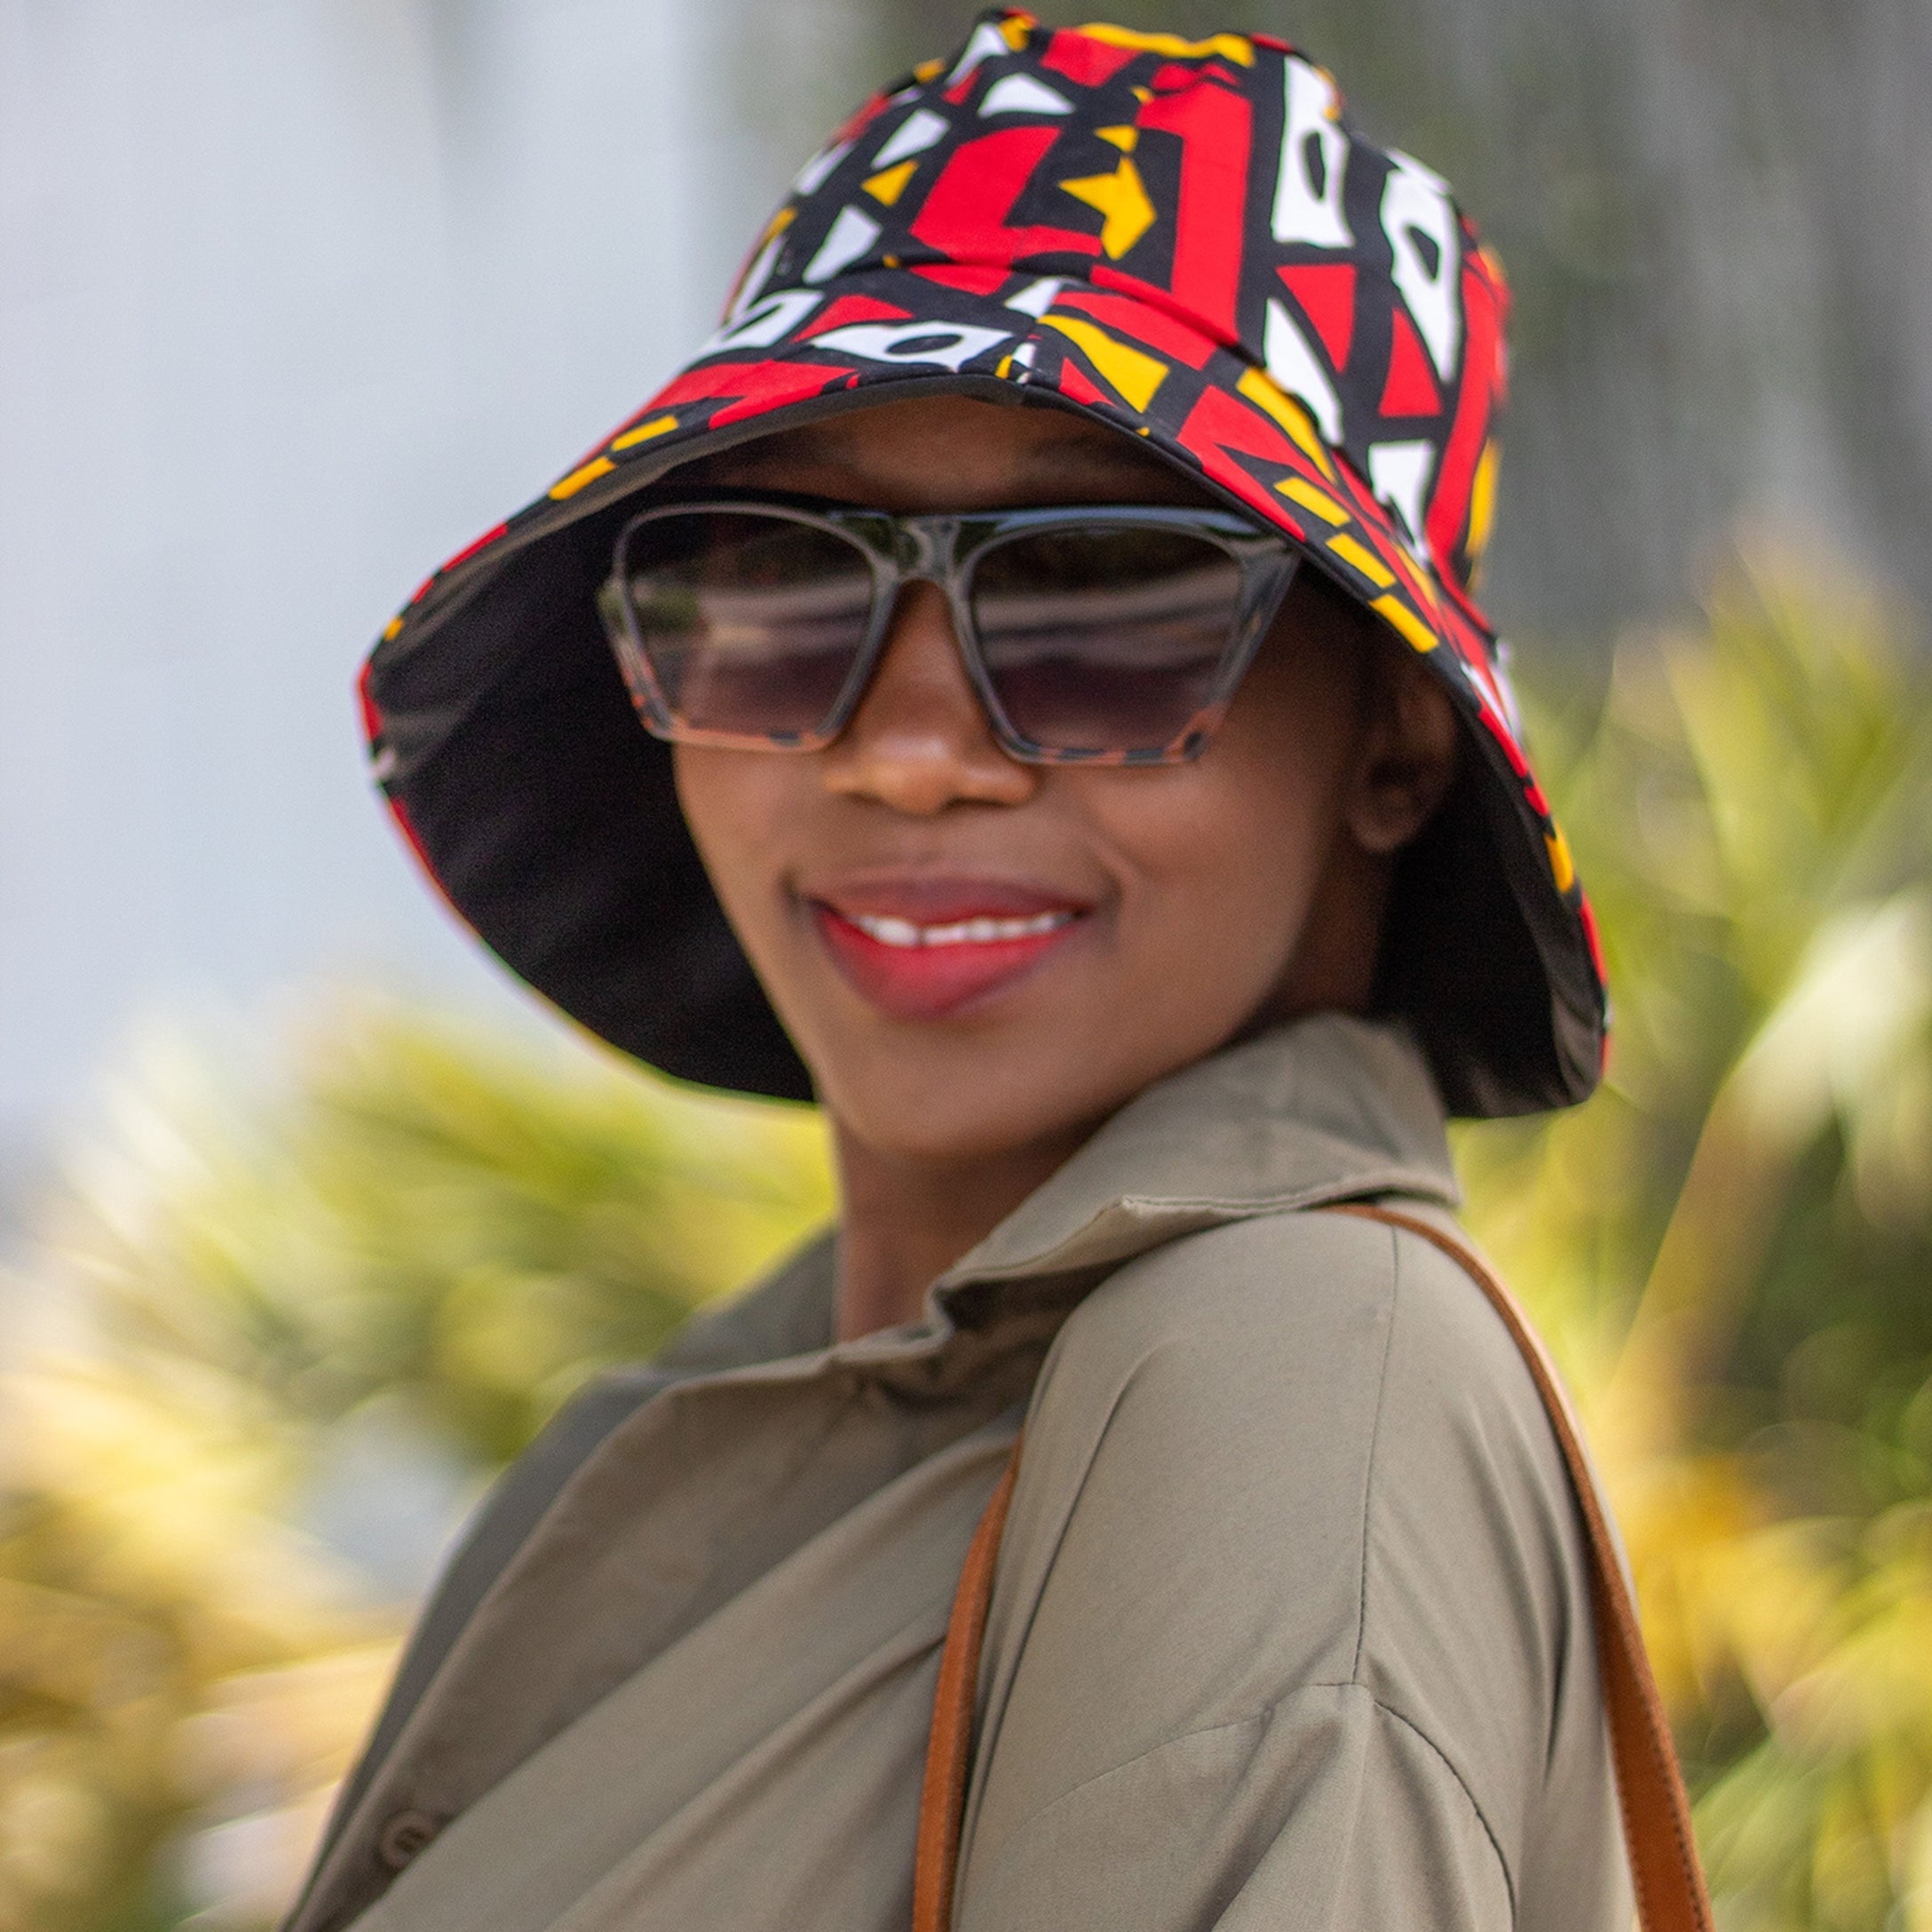 African Print Bucket Hat Unisex - Red/ Orange/Black & White Tribal Print